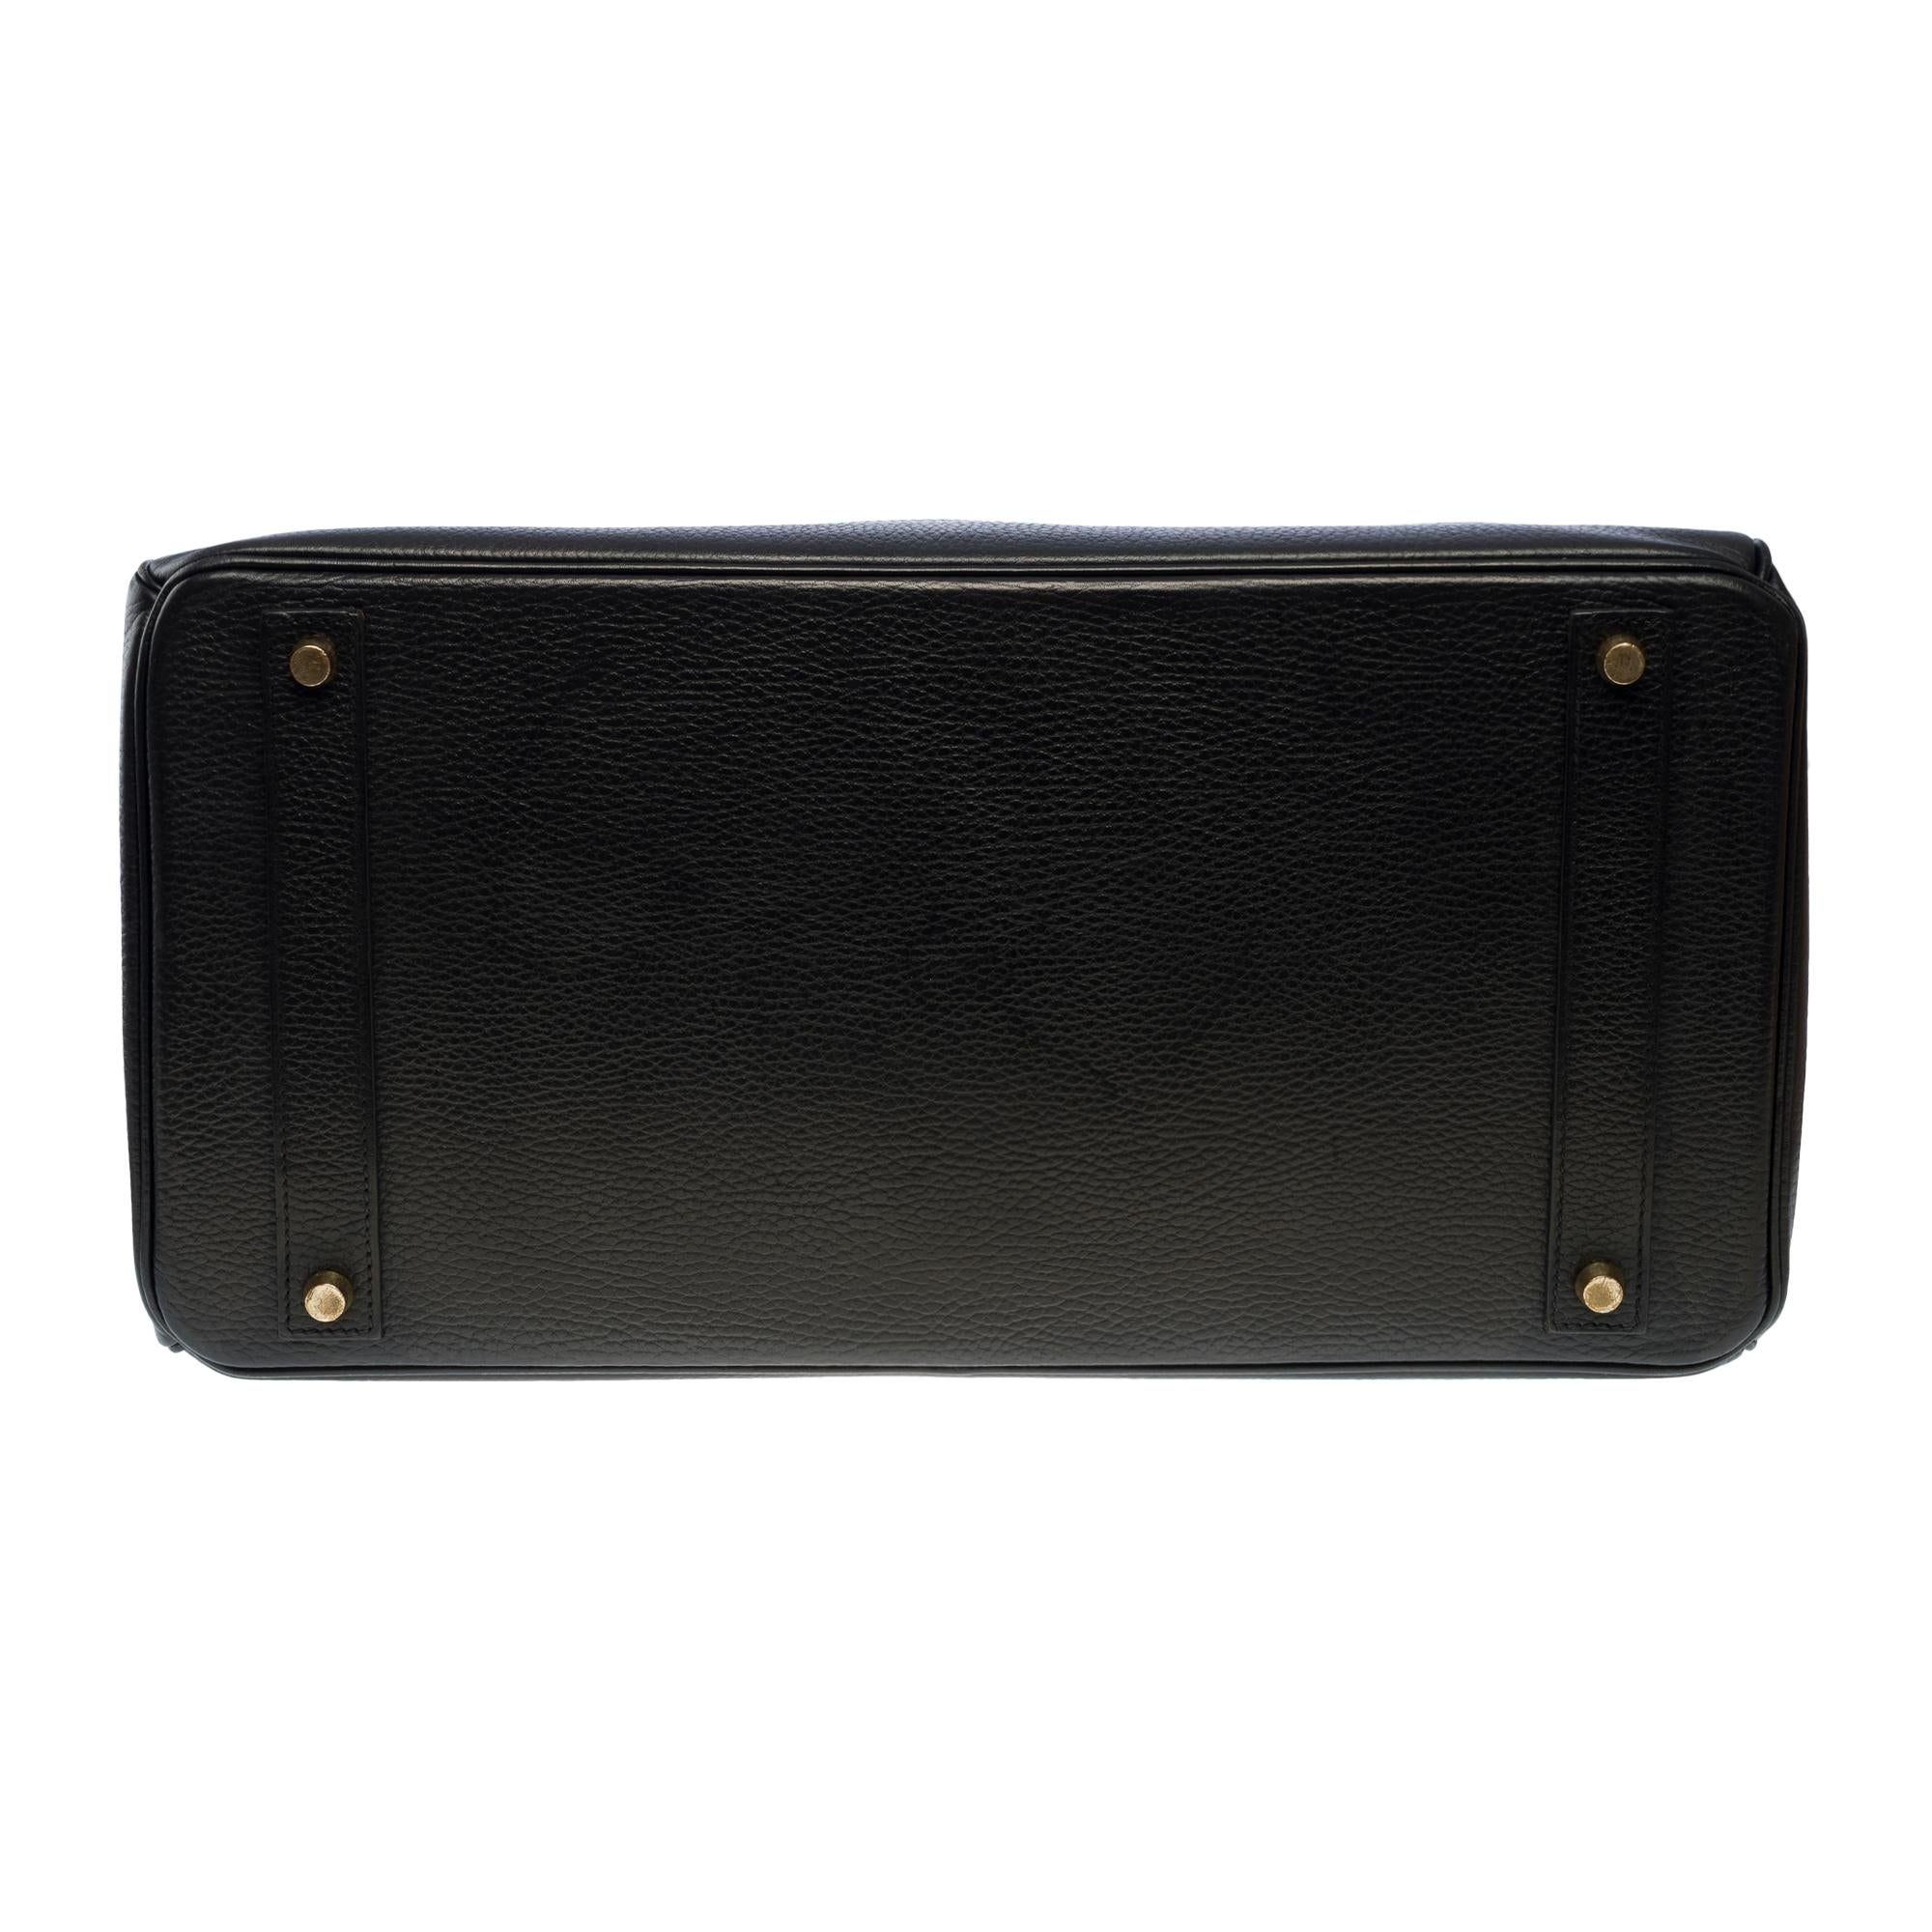 Classy Hermes Birkin 40cm handbag in Black Fjord leather, GHW 5